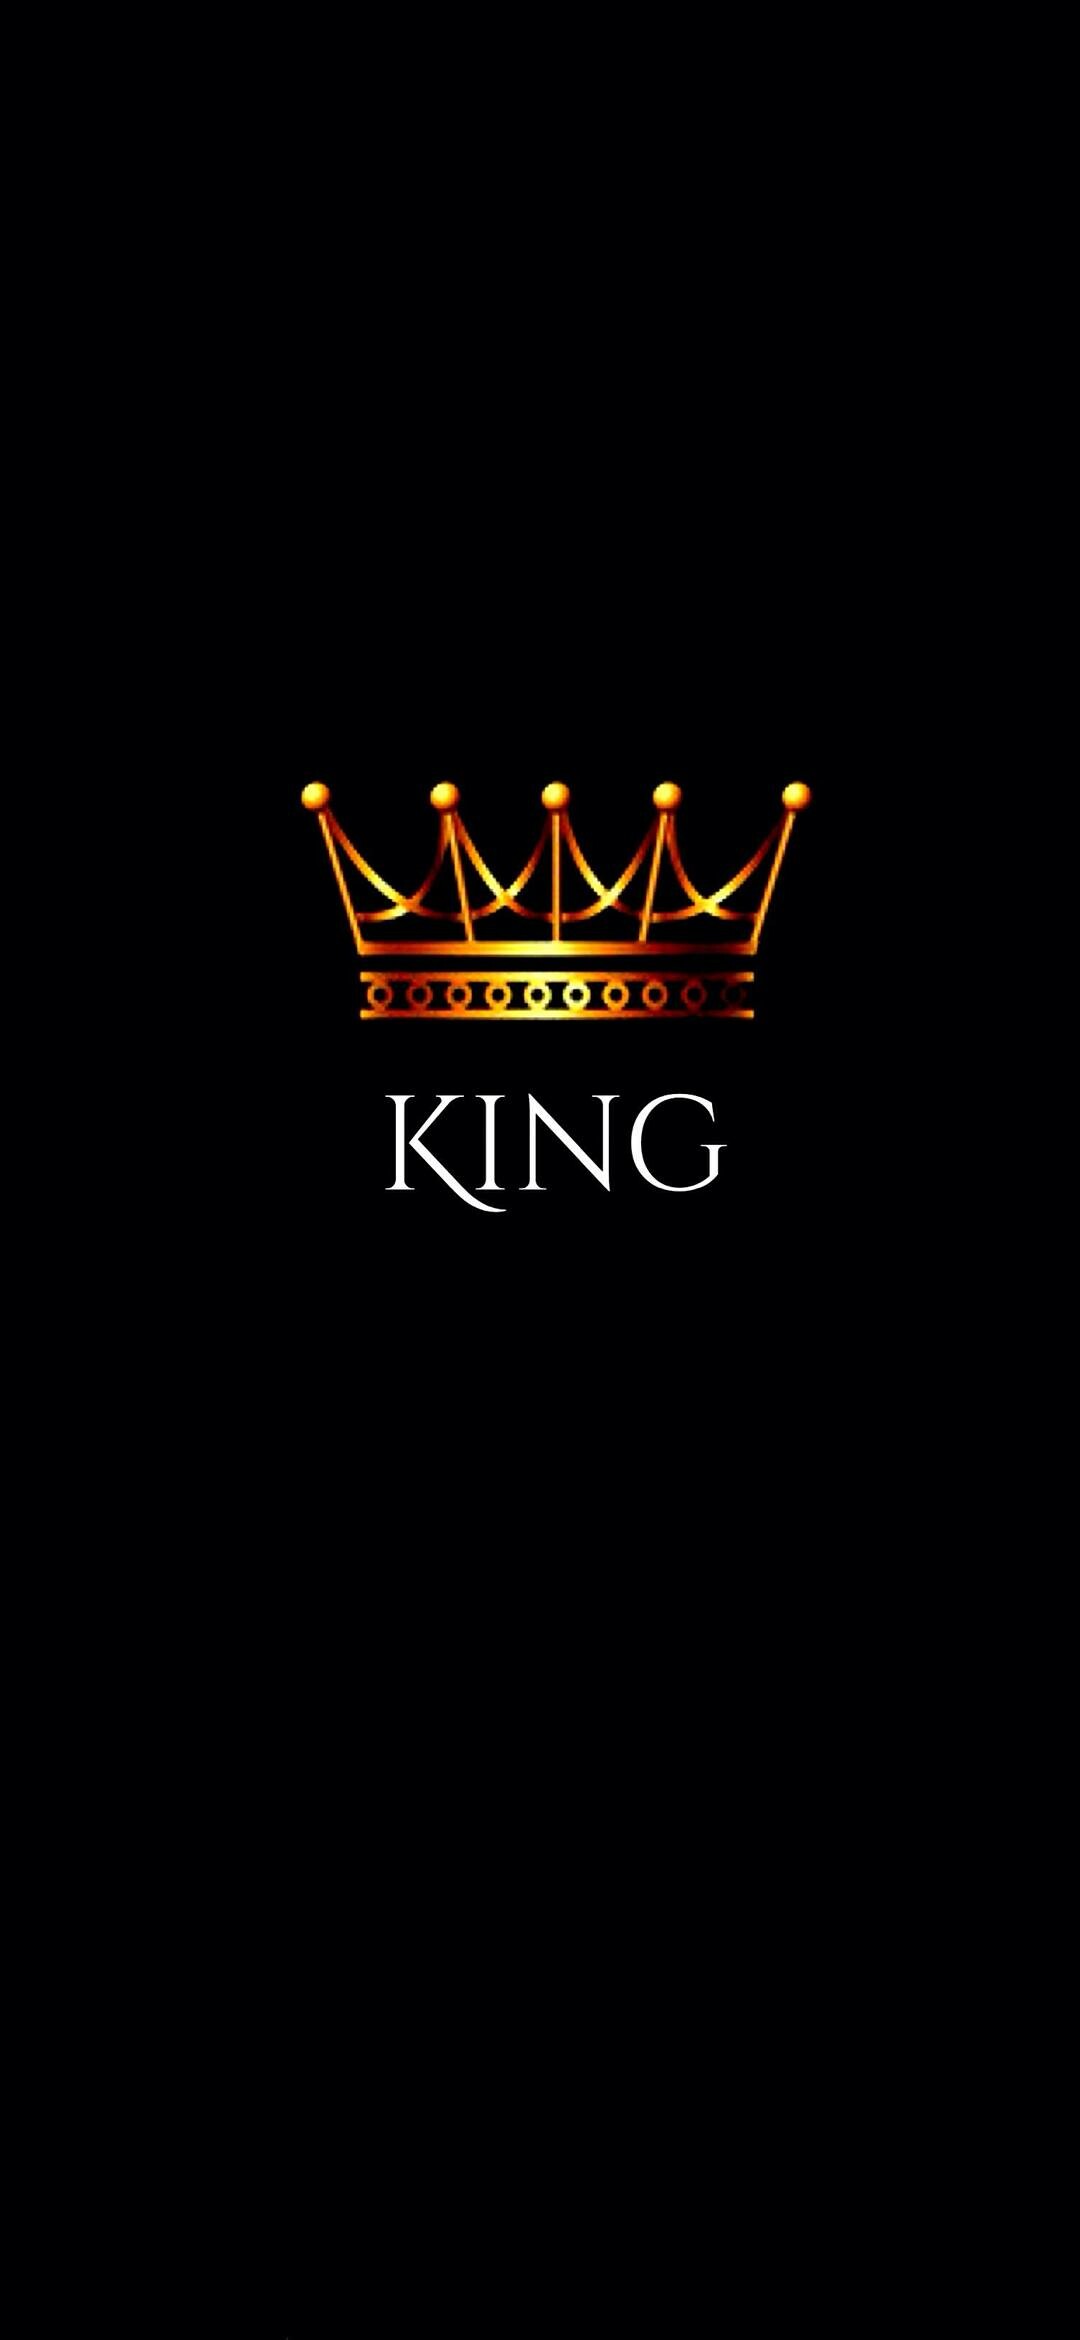 King, Black king representation, Dark and powerful, Striking wallpaper, 1080x2340 HD Handy